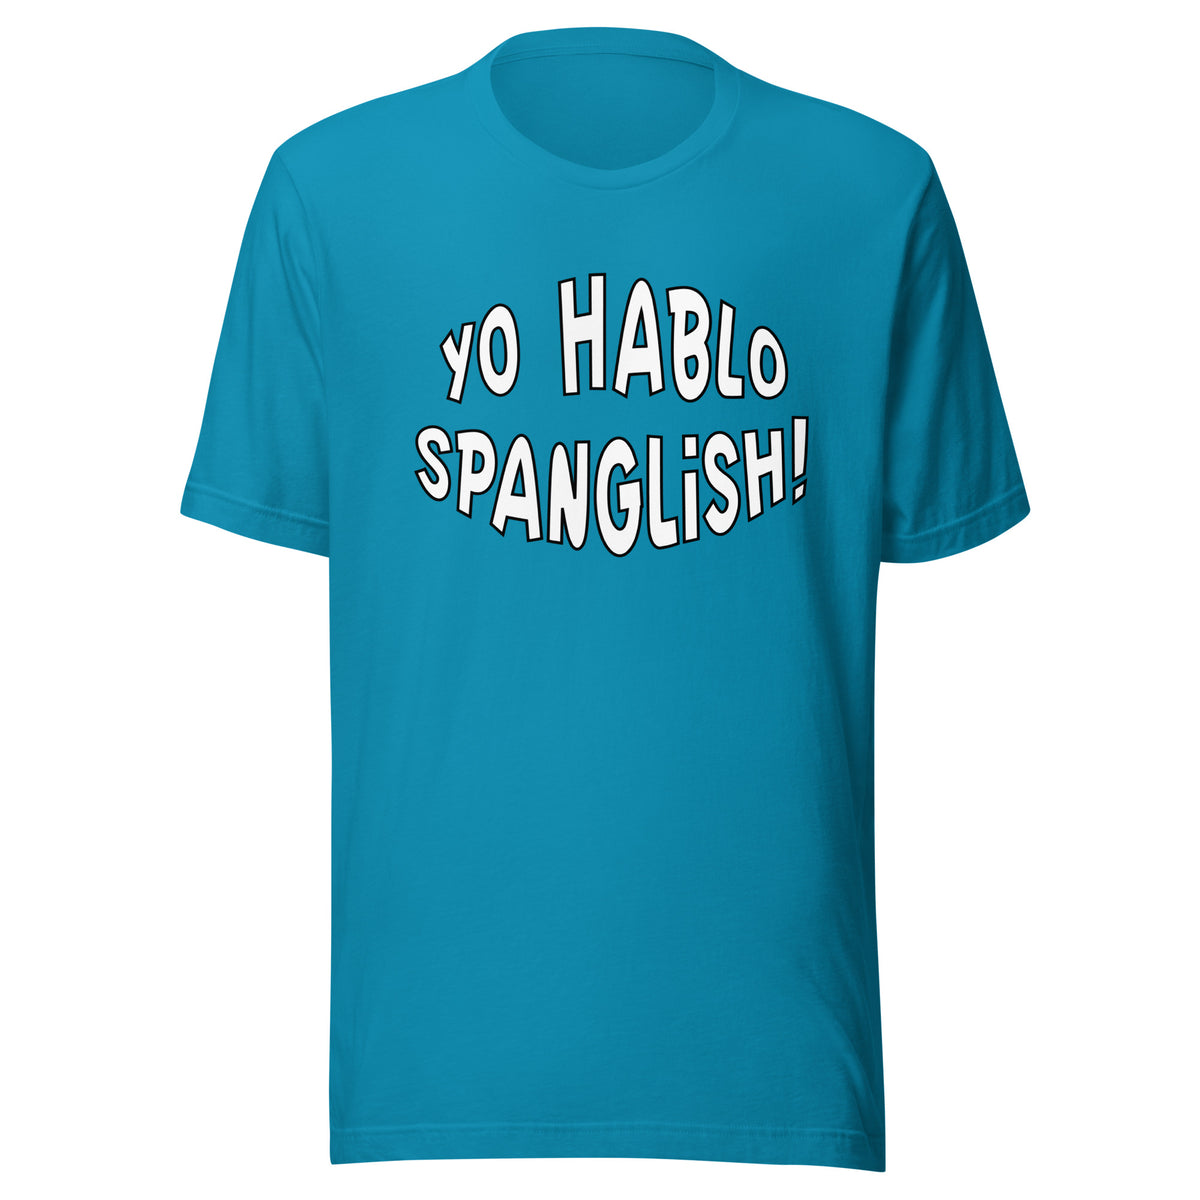 Camiseta Hablo Spanglish